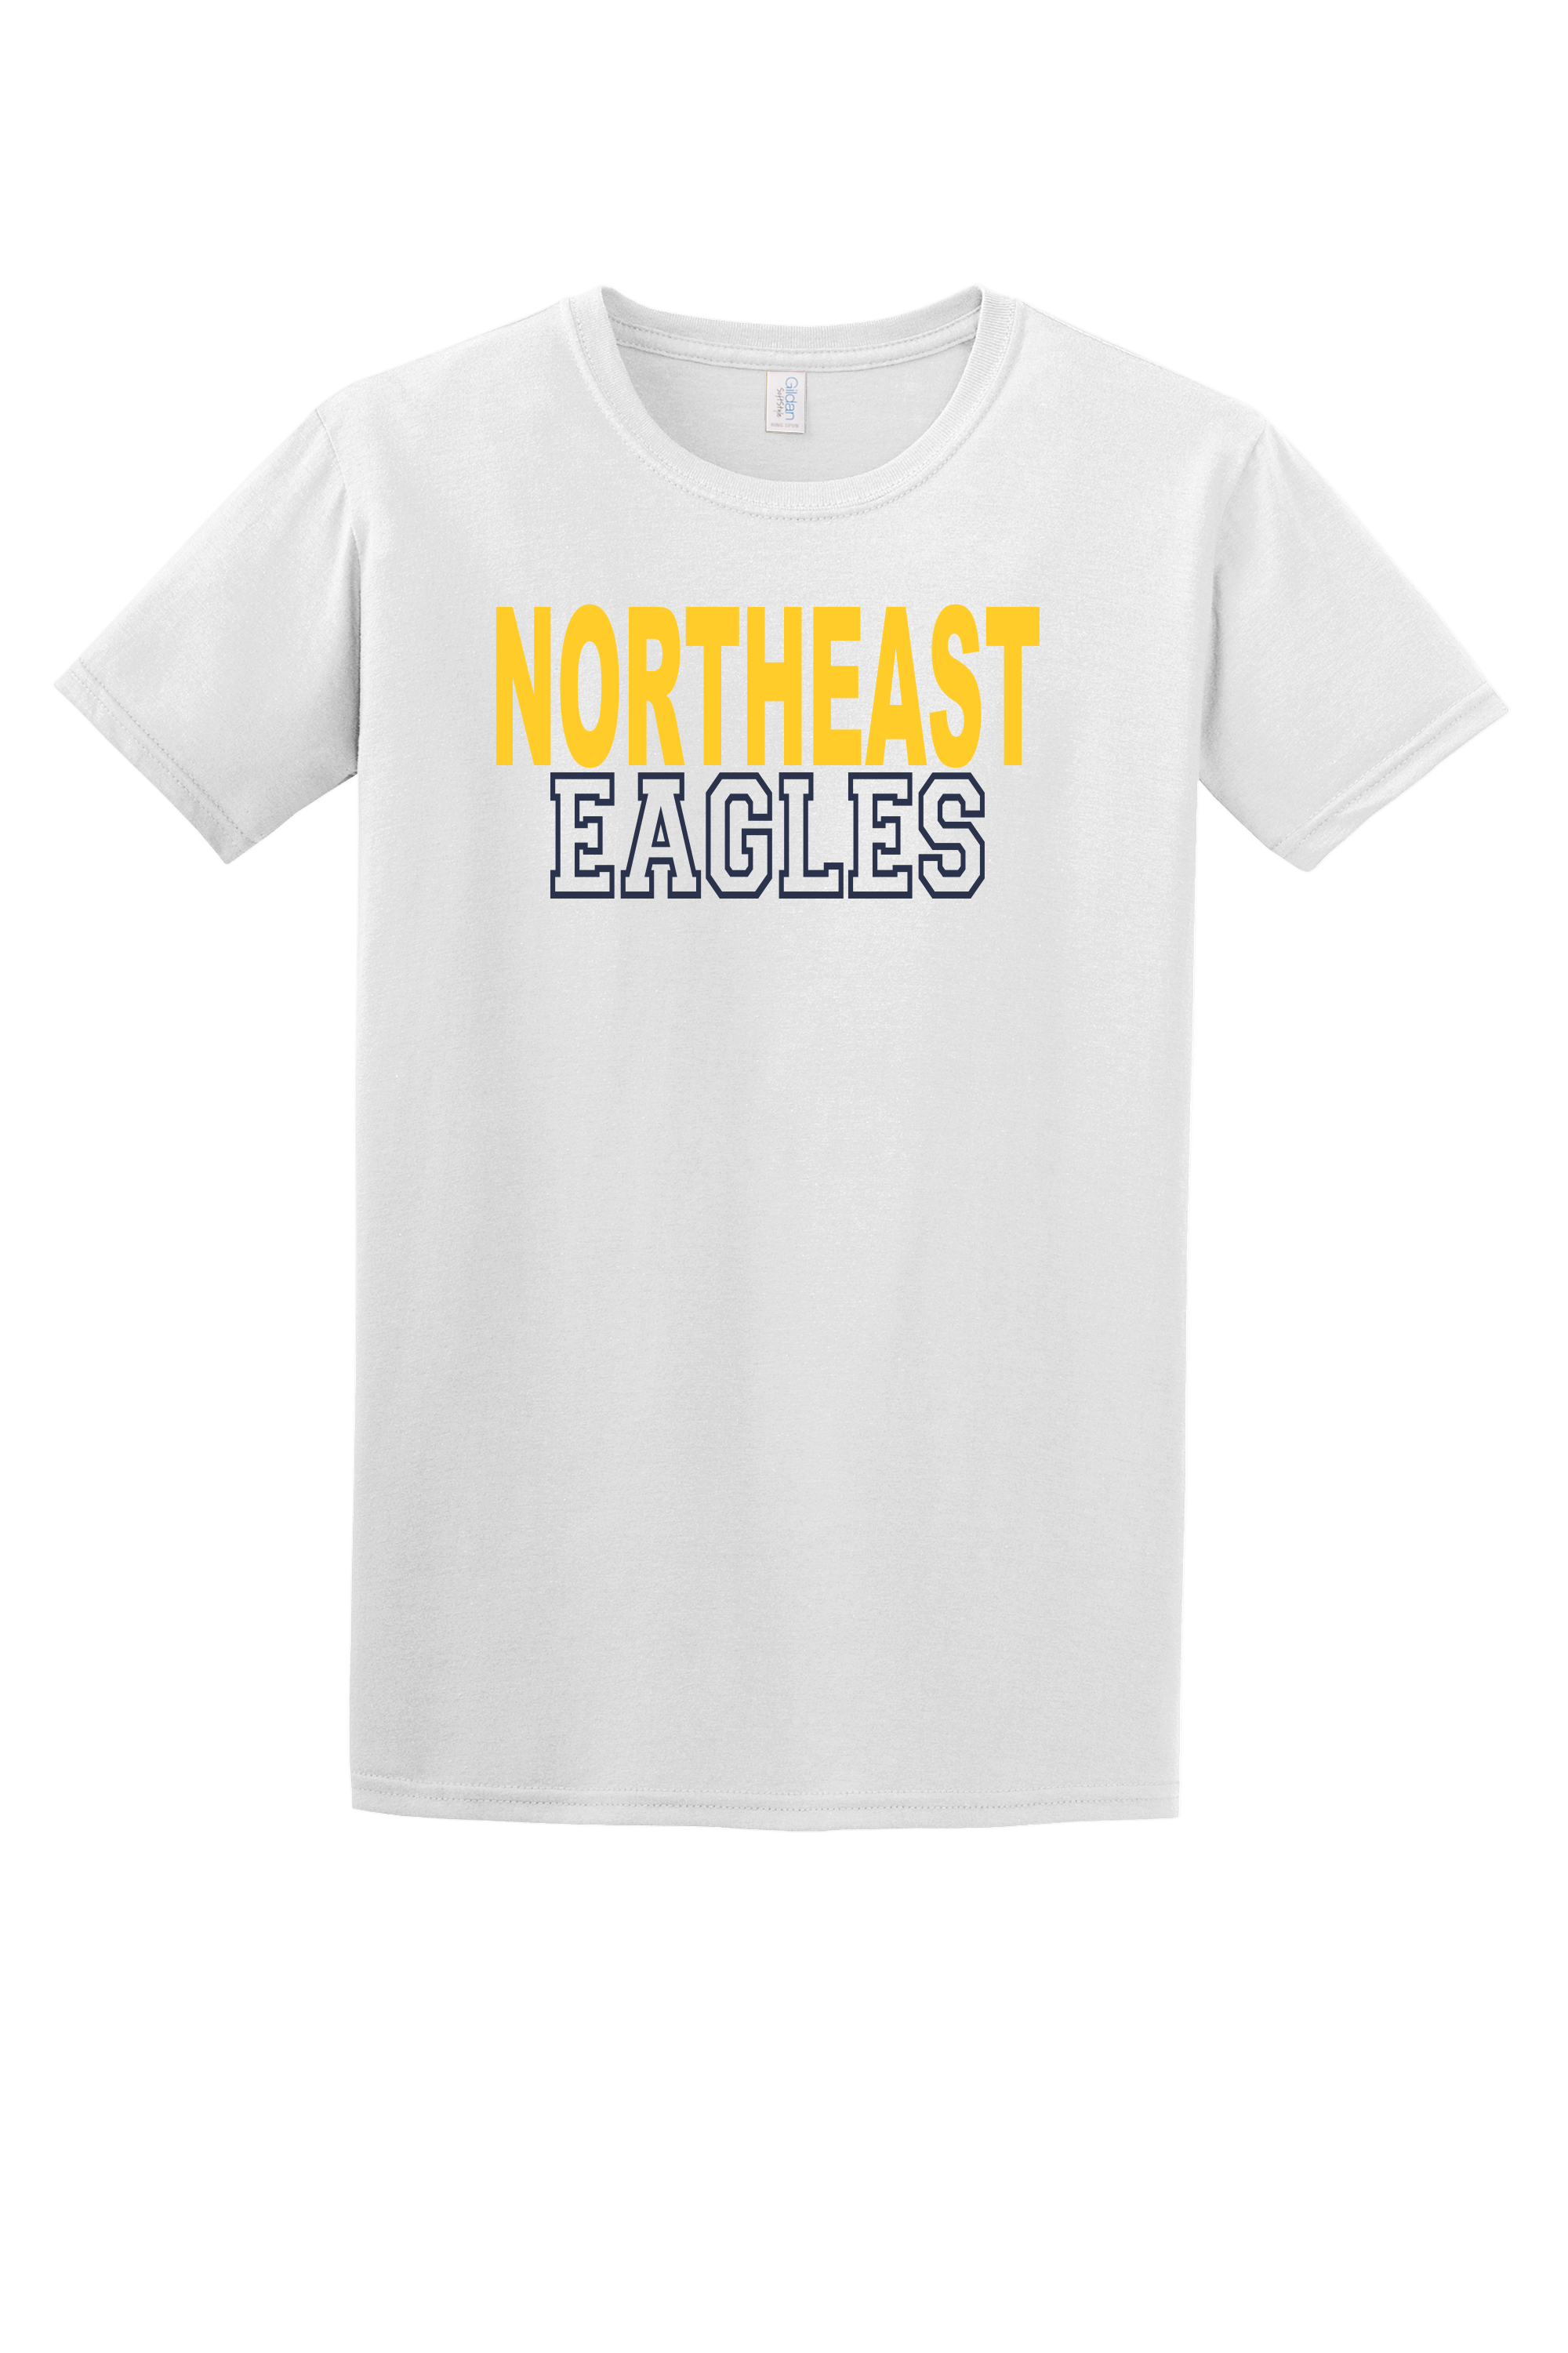 Northeast Eagles Tee (Block)